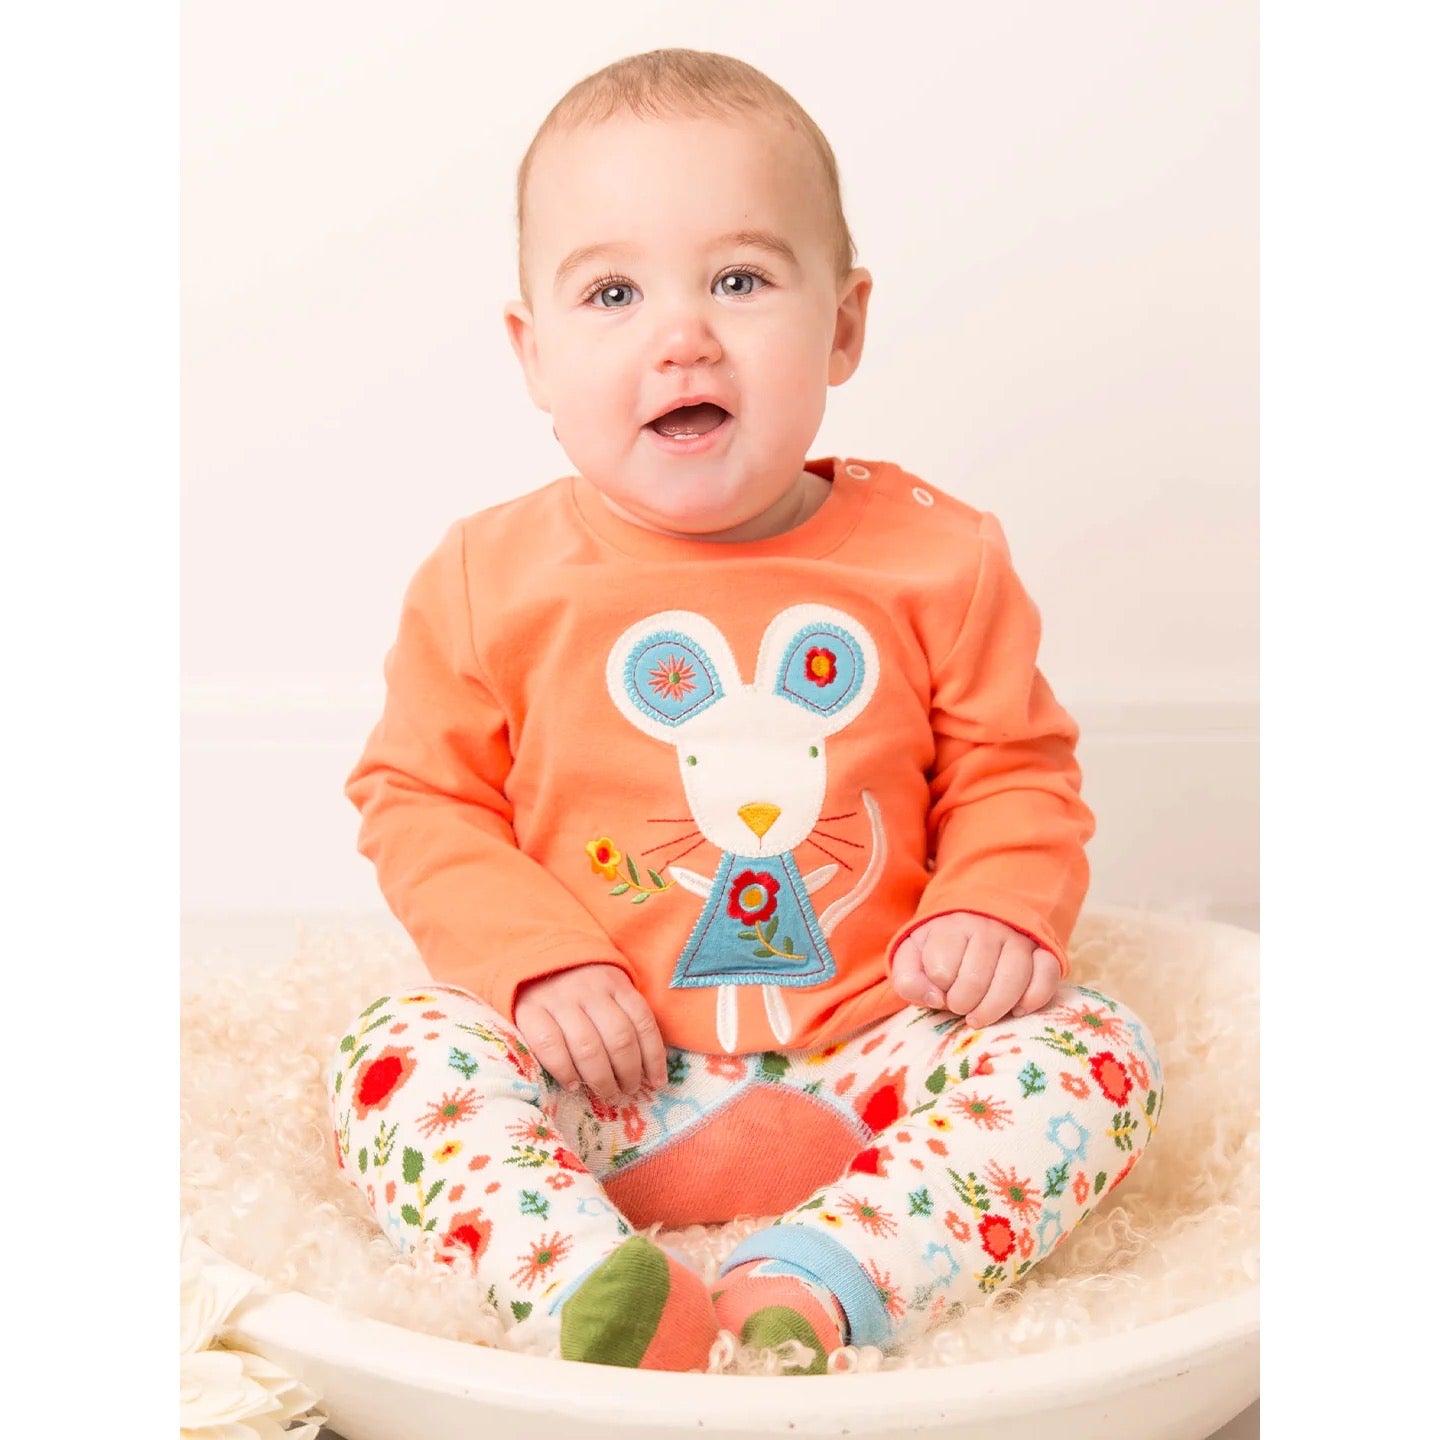 Blade & Rose Maura Mouse Infant T-Shirt Clothing 0-6M / Tangerine,6-12M / Tangerine,12-24M / Tangerine